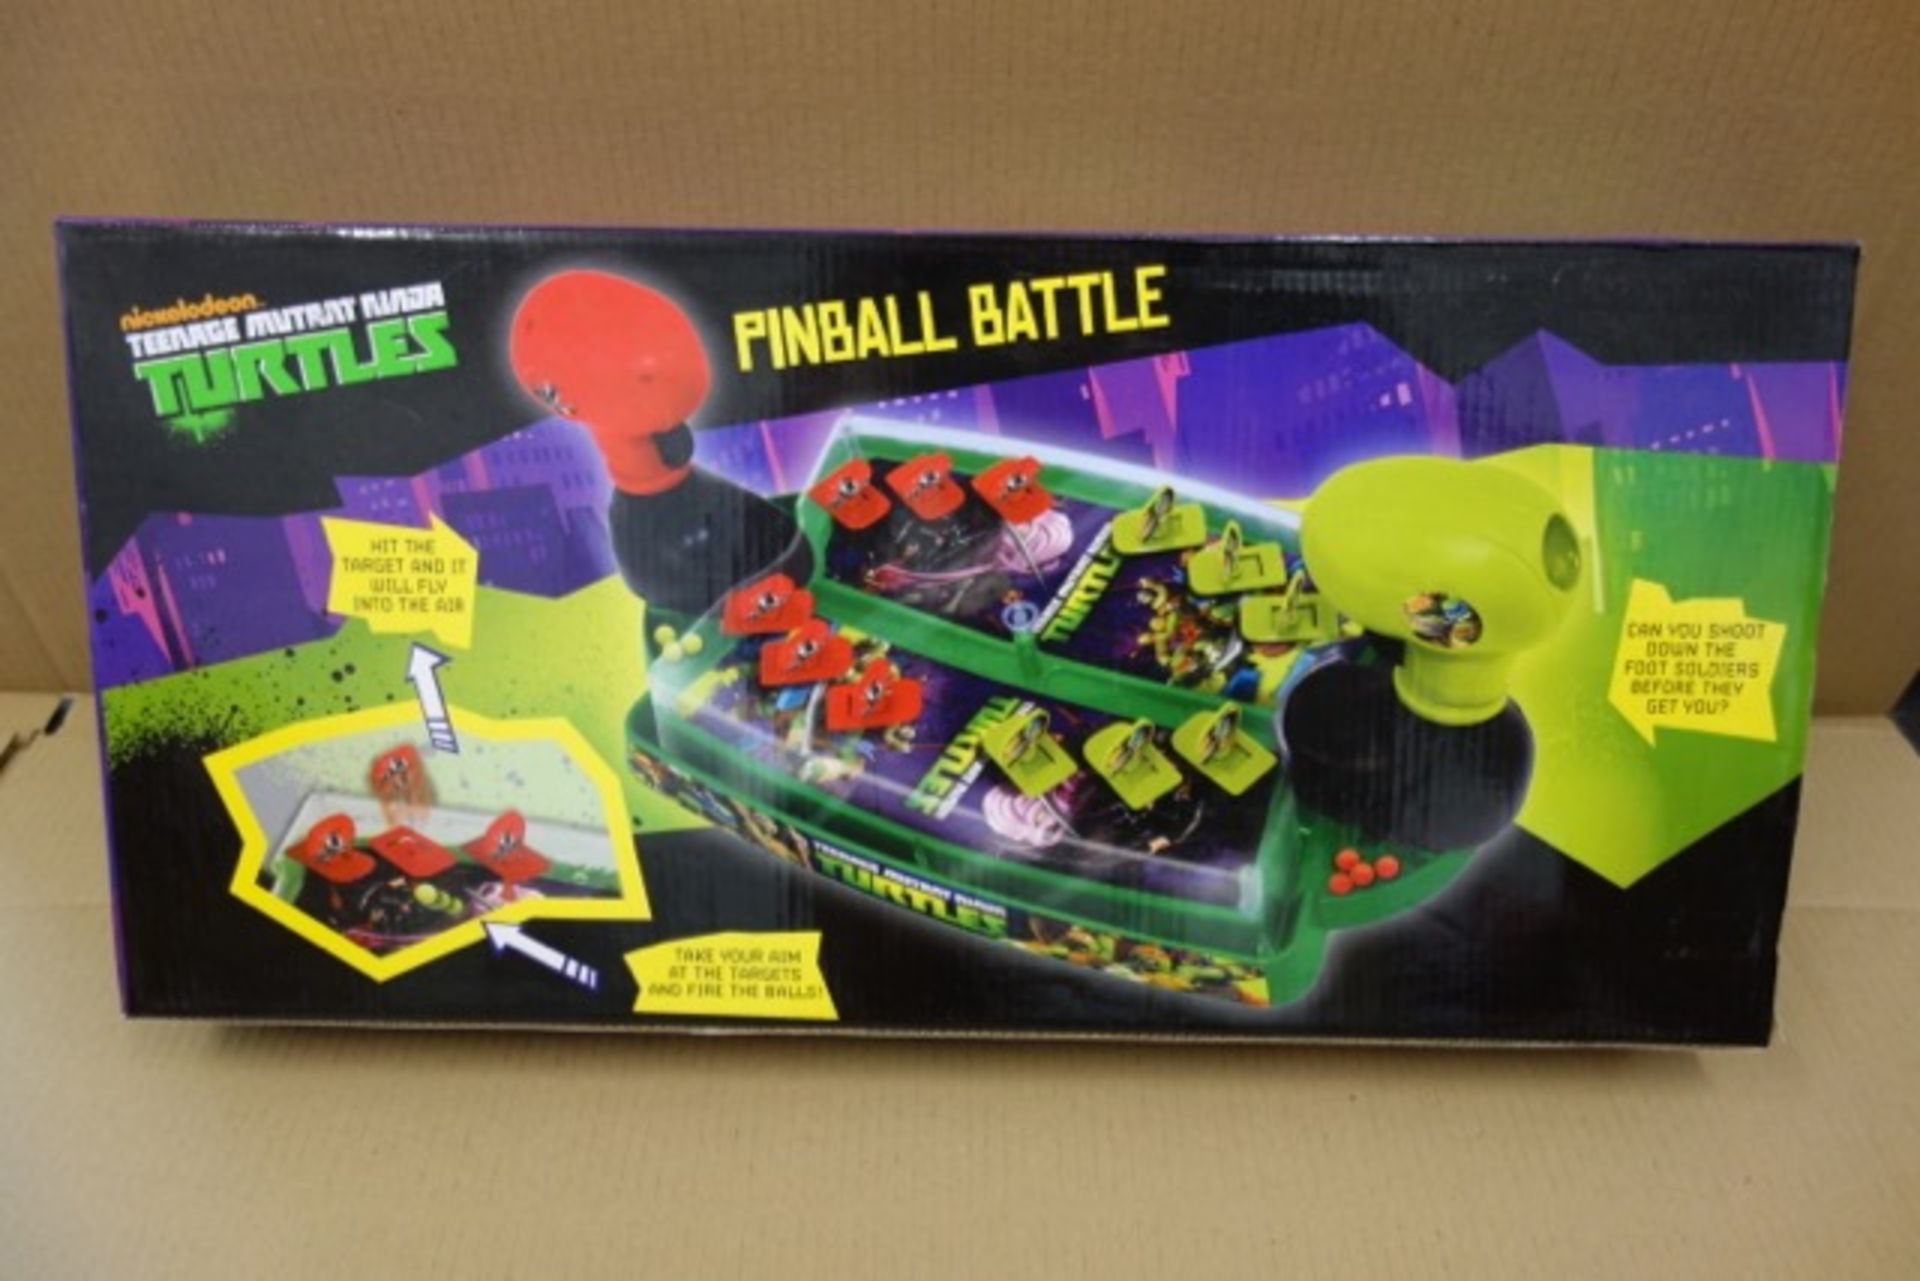 18 x Nickelodeon Teenage Mutant Ninja Turtles Pinball Battle Game. 'Take your aim at the targets and - Image 2 of 3